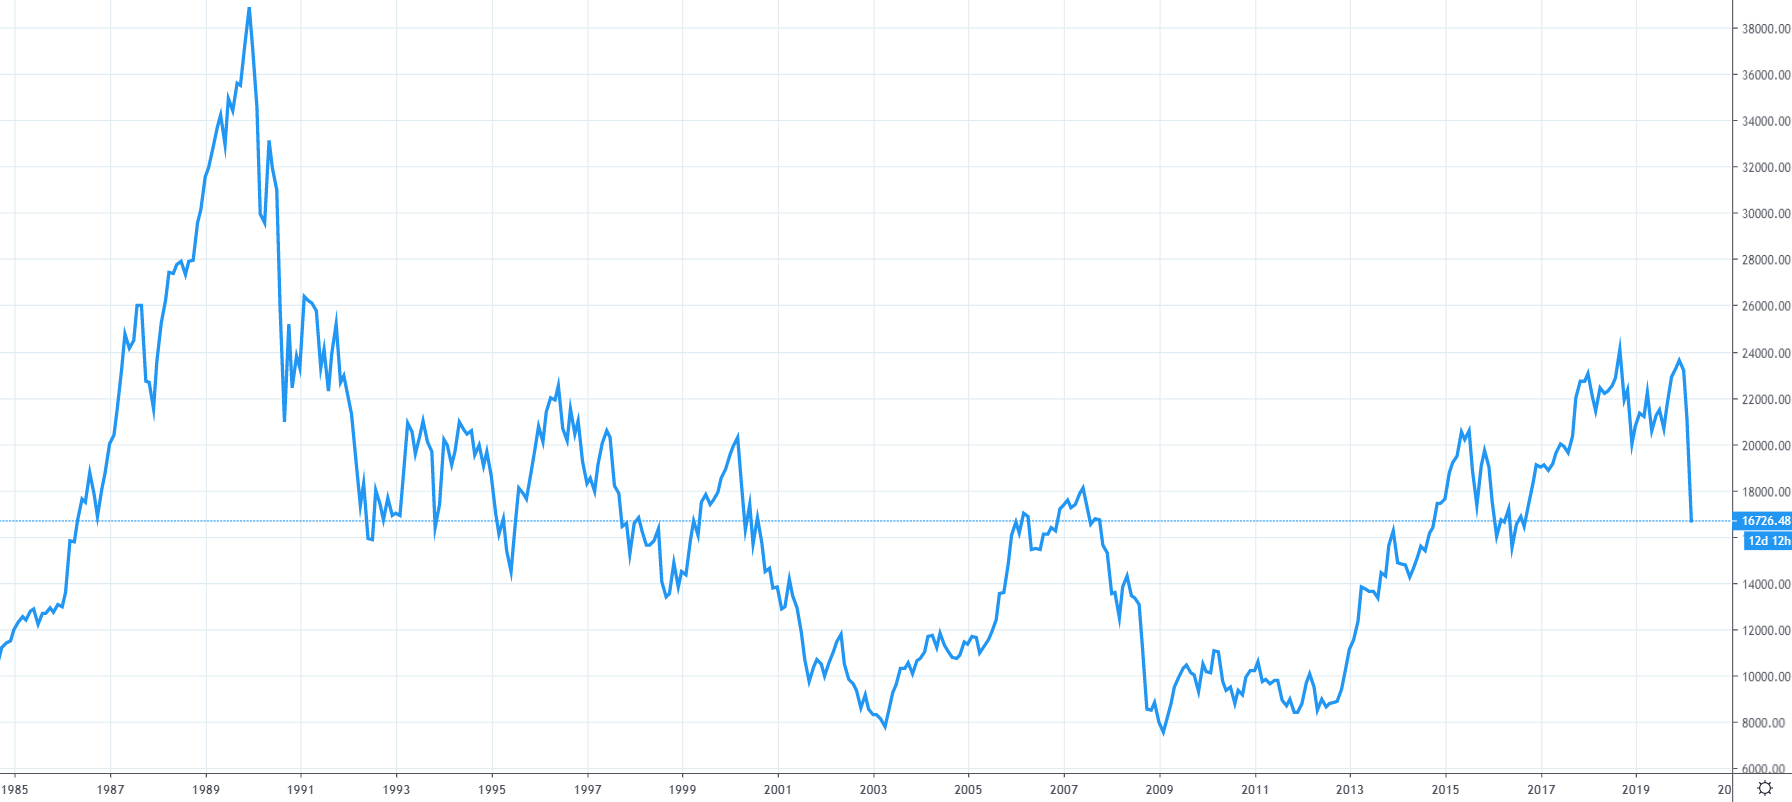 Graf indexu Nikkei 225